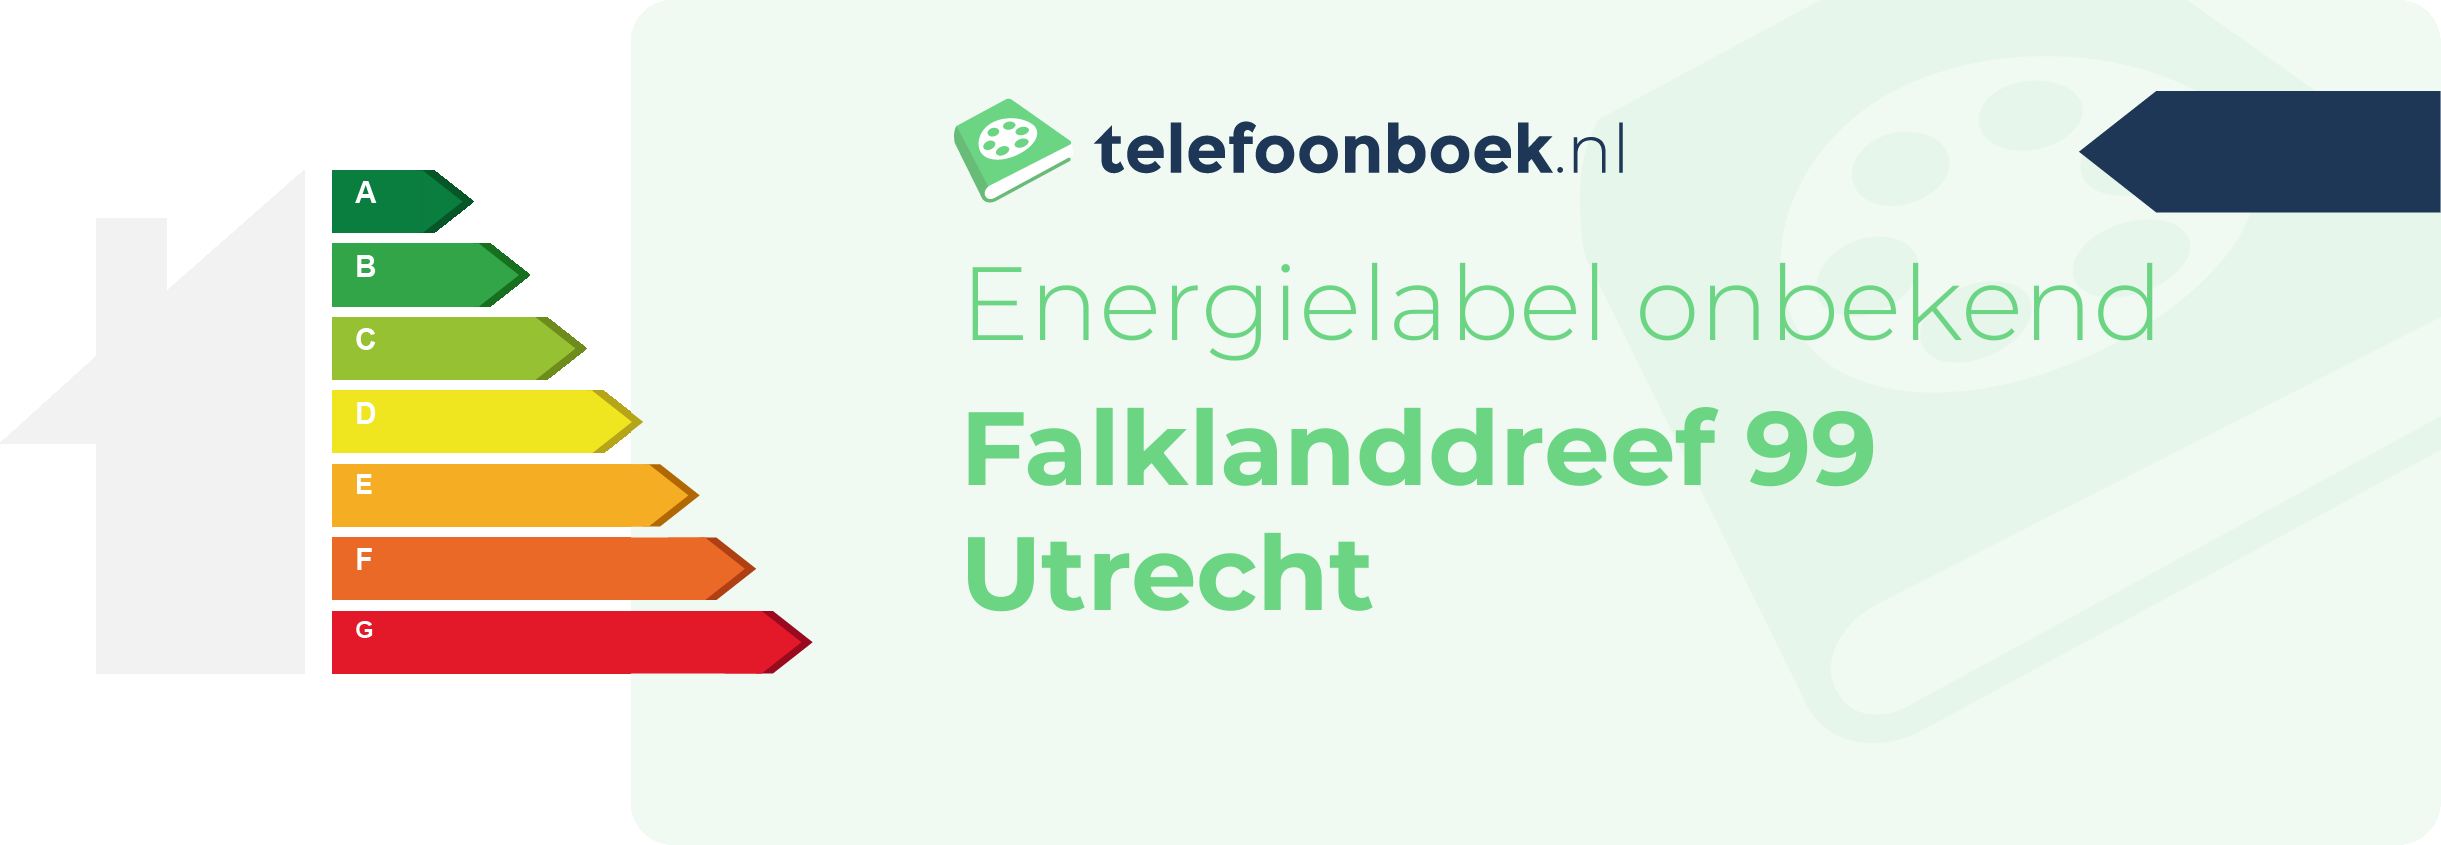 Energielabel Falklanddreef 99 Utrecht